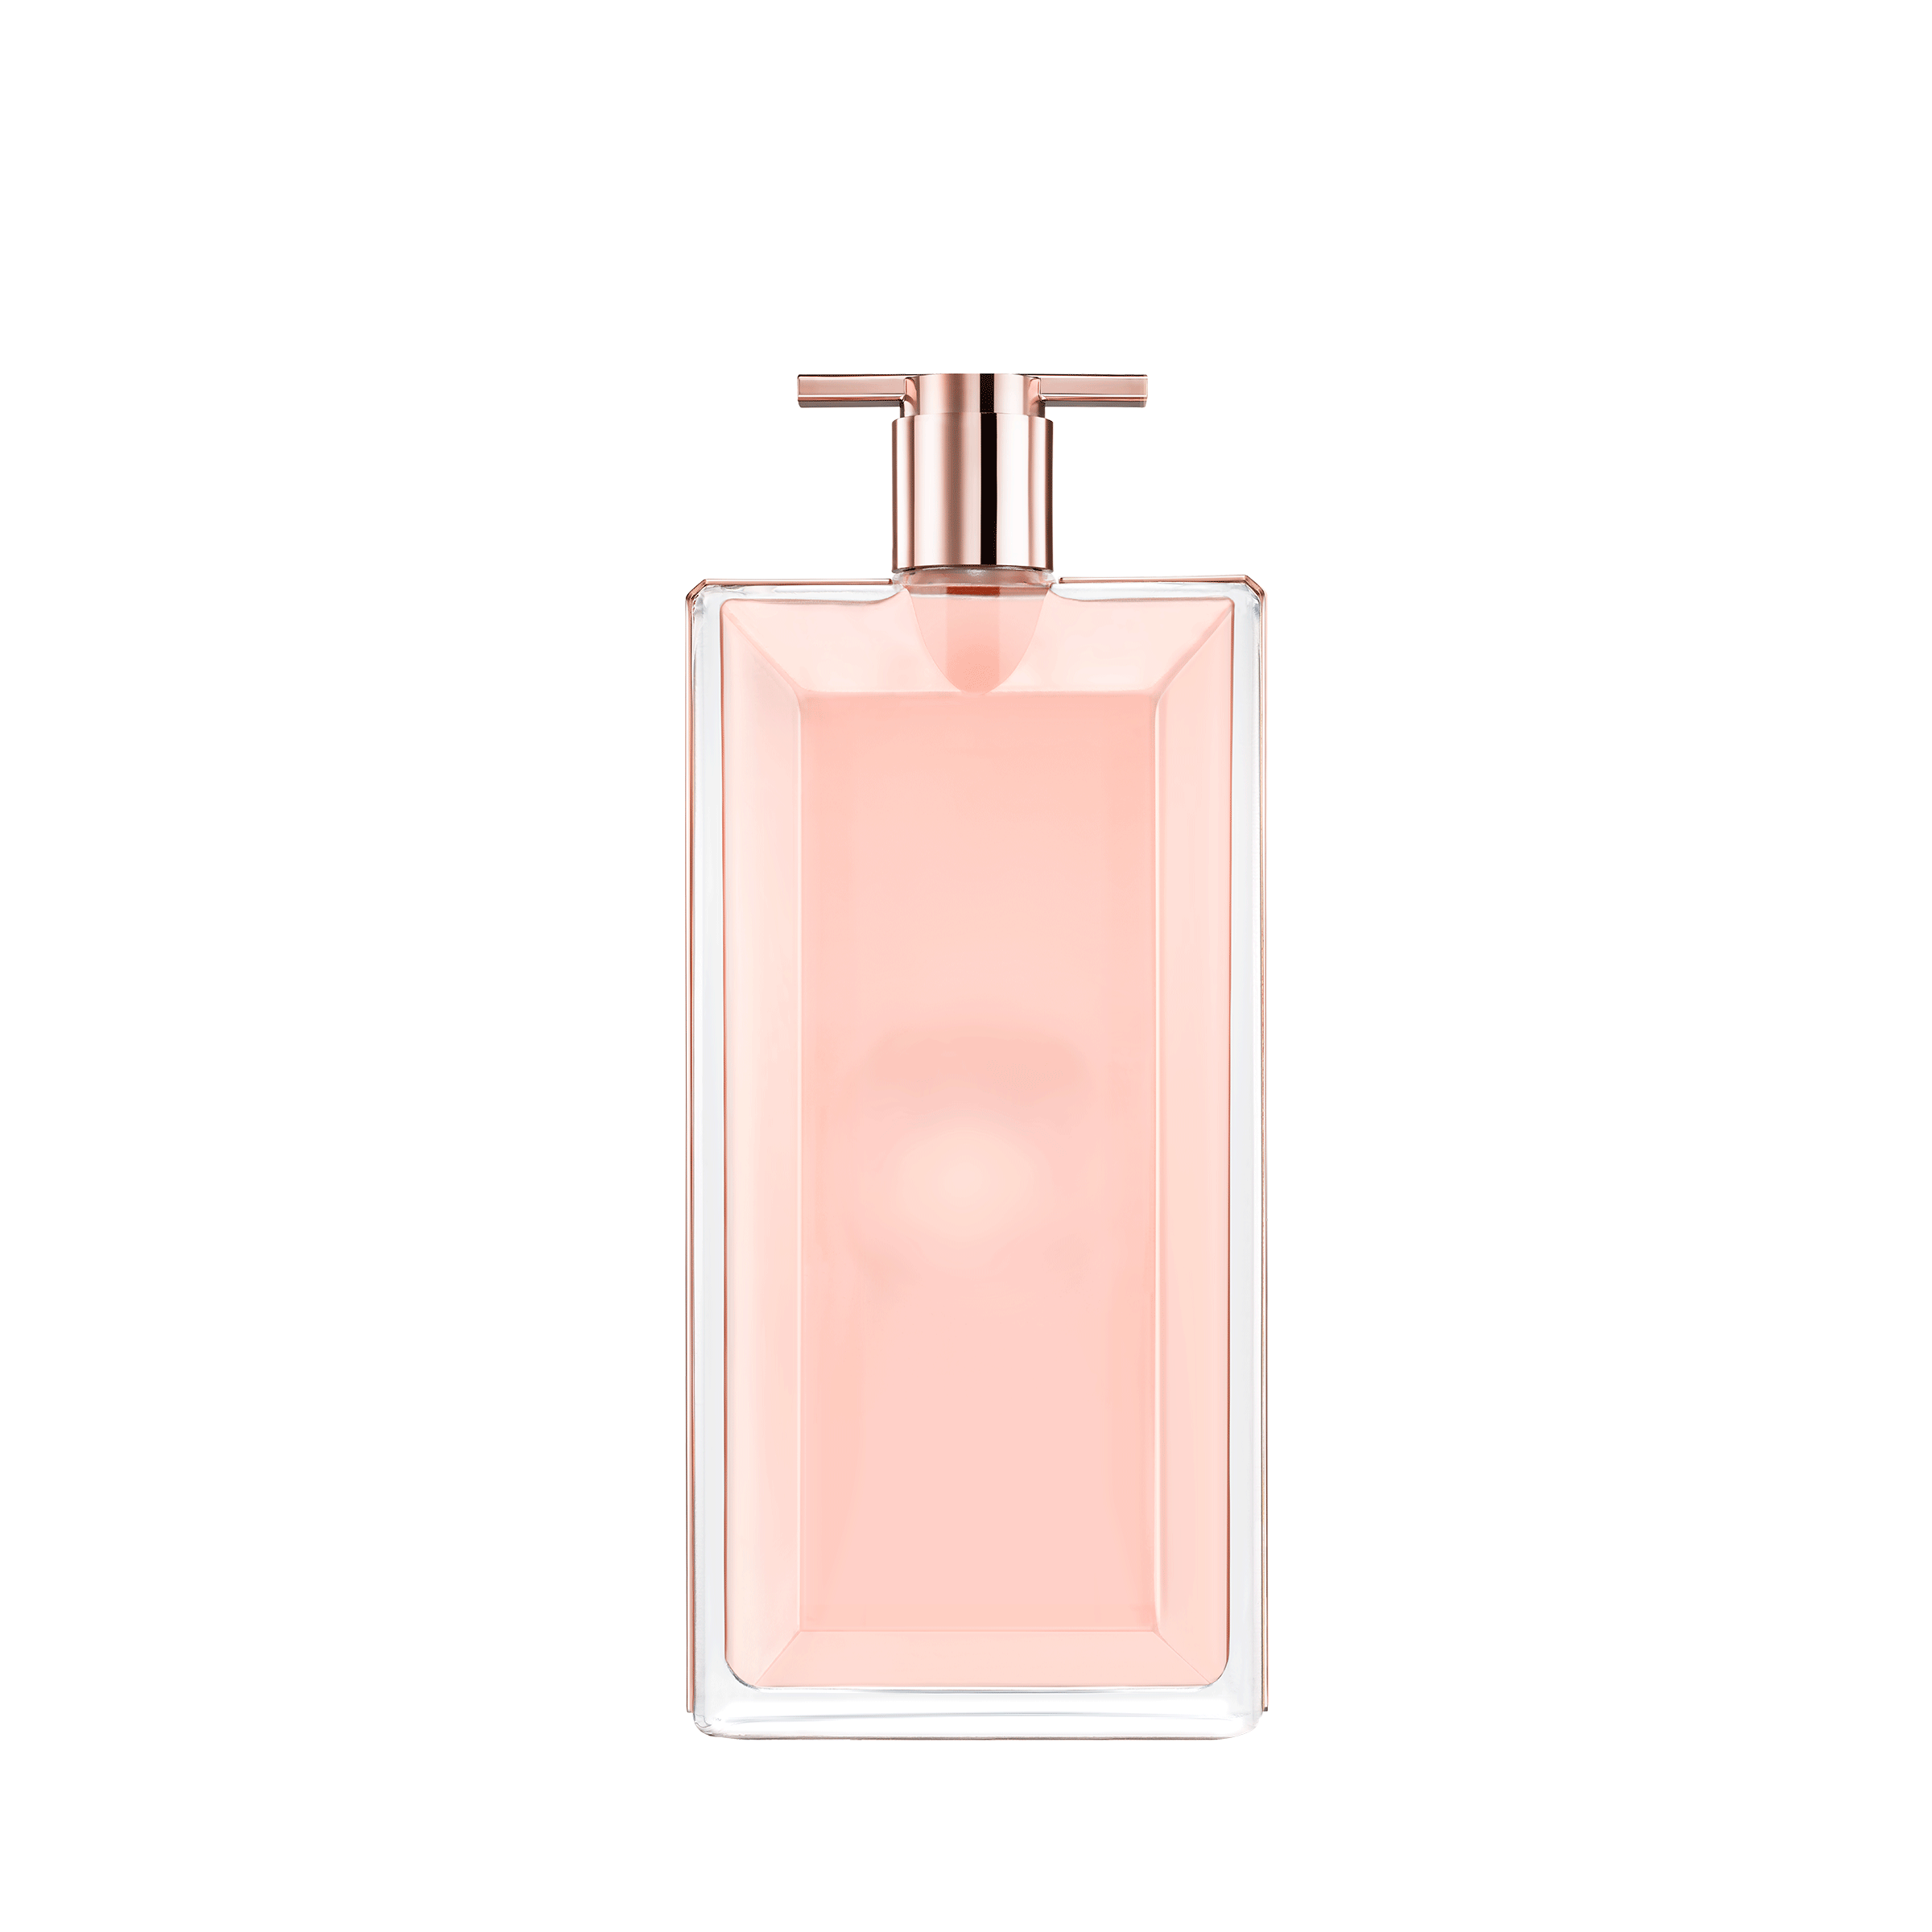 Zendaya Is The New Face Of Lancôme’s Idôle Fragrance